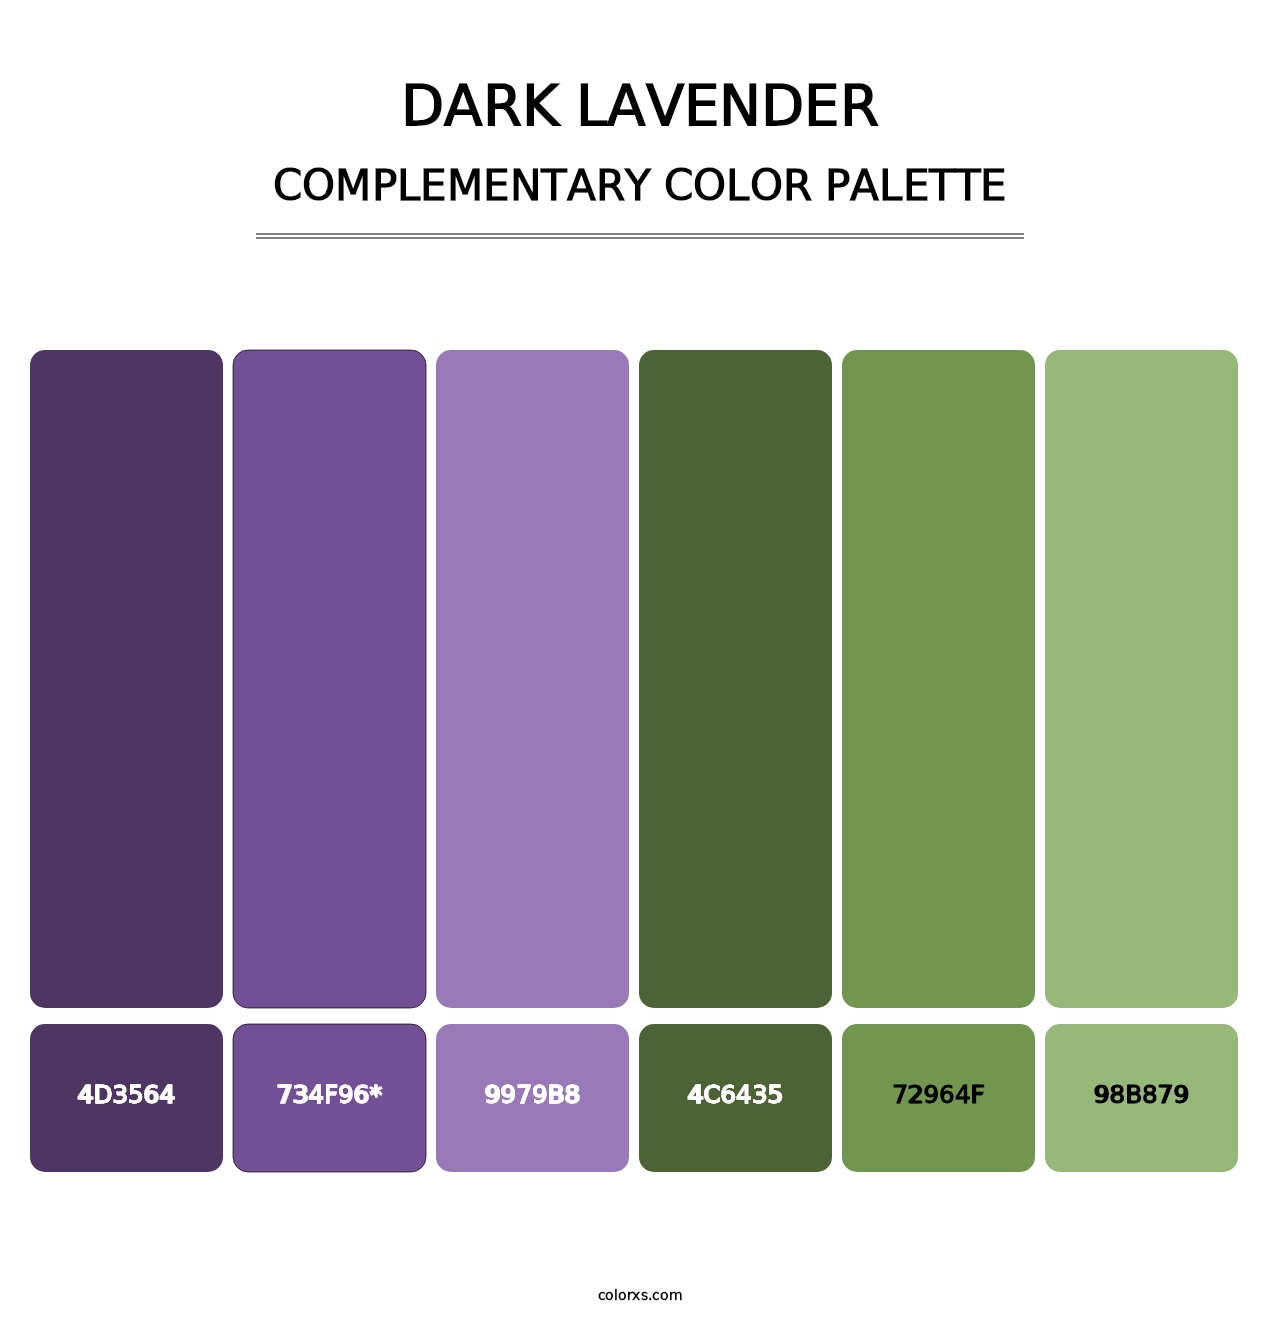 Dark Lavender - Complementary Color Palette